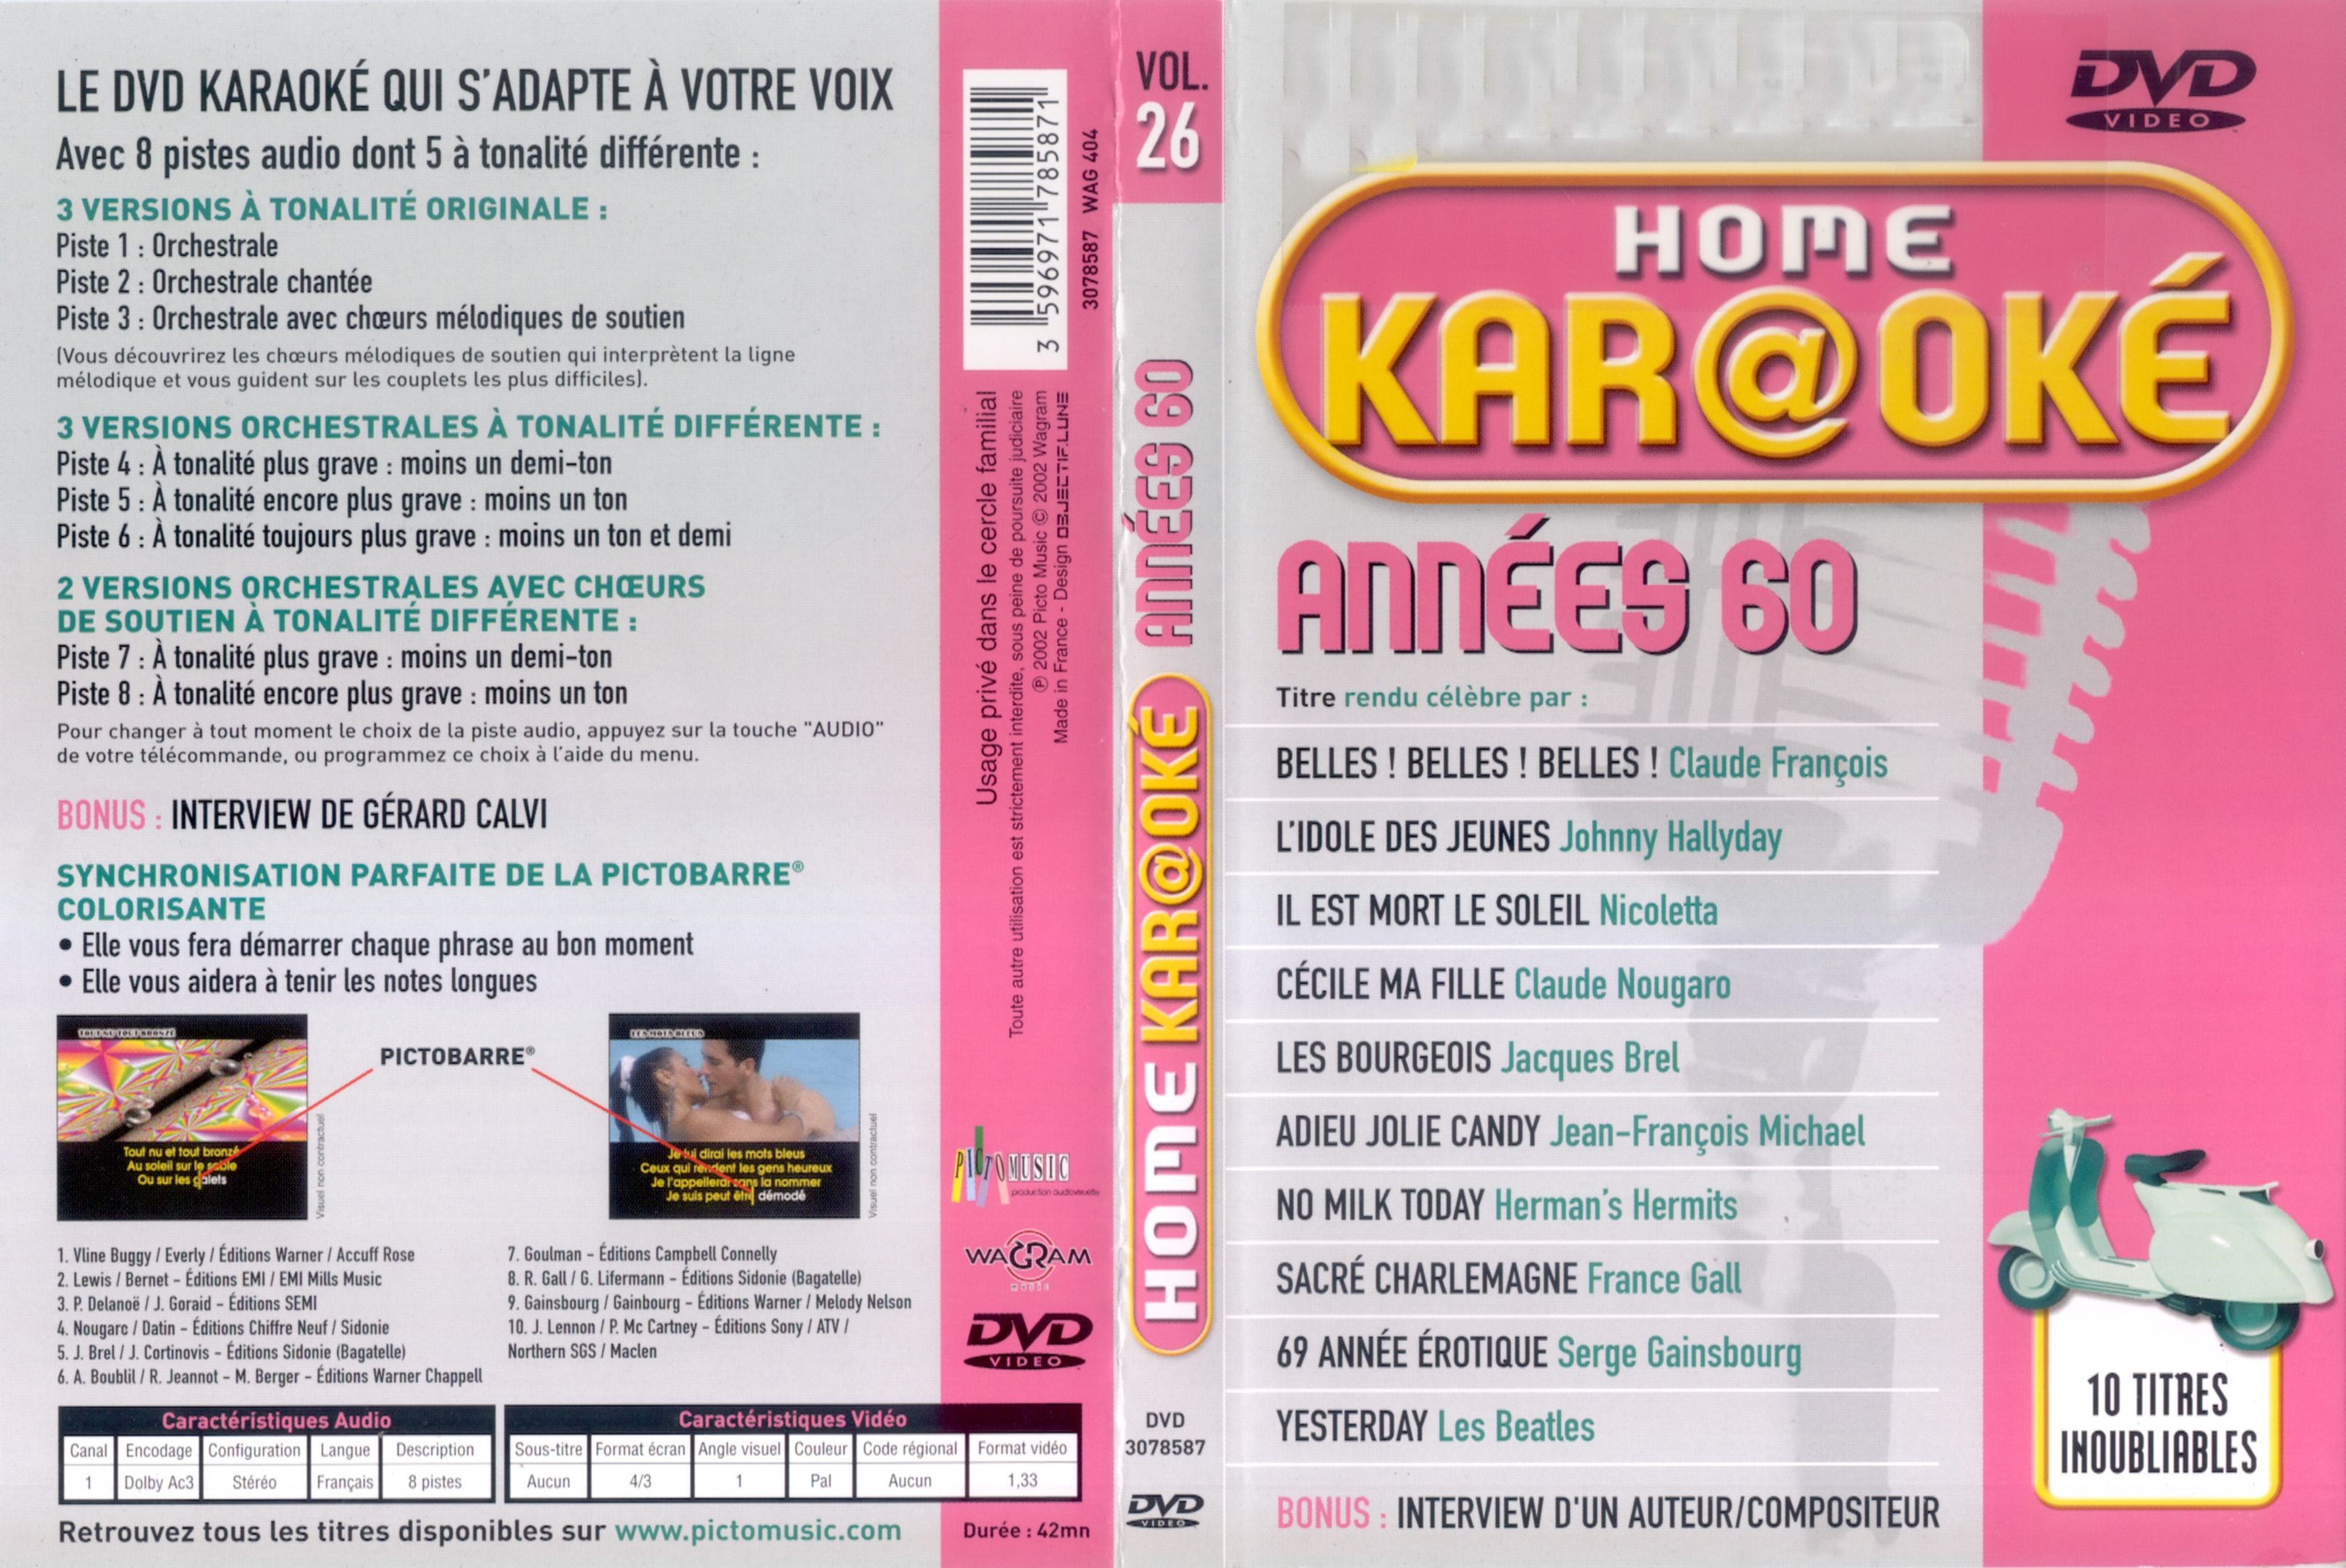 Jaquette DVD Home karaok vol 26